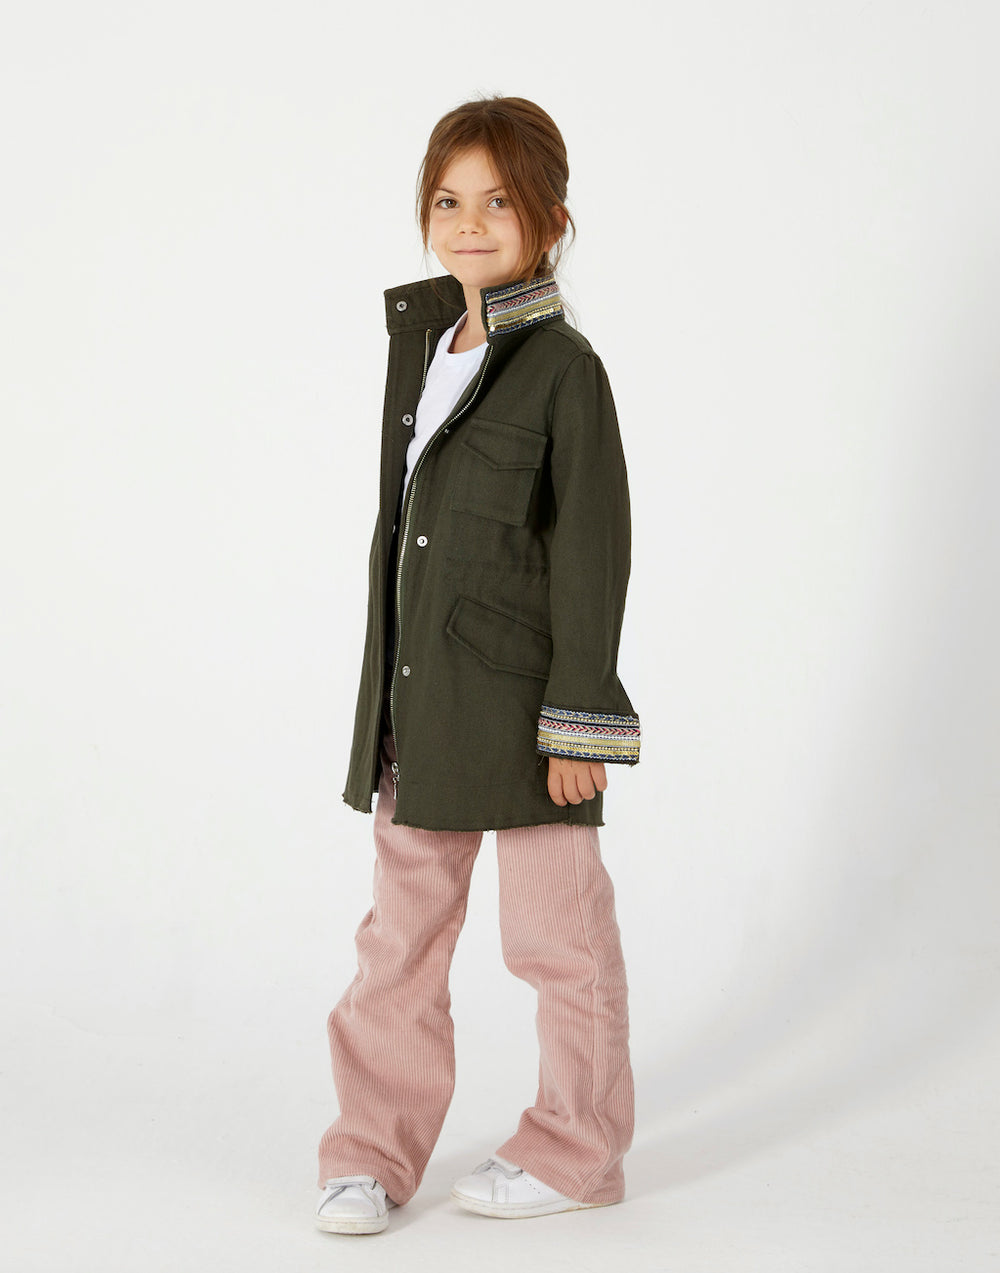 pinolini-kid-girl-khaki-jacket-jc001